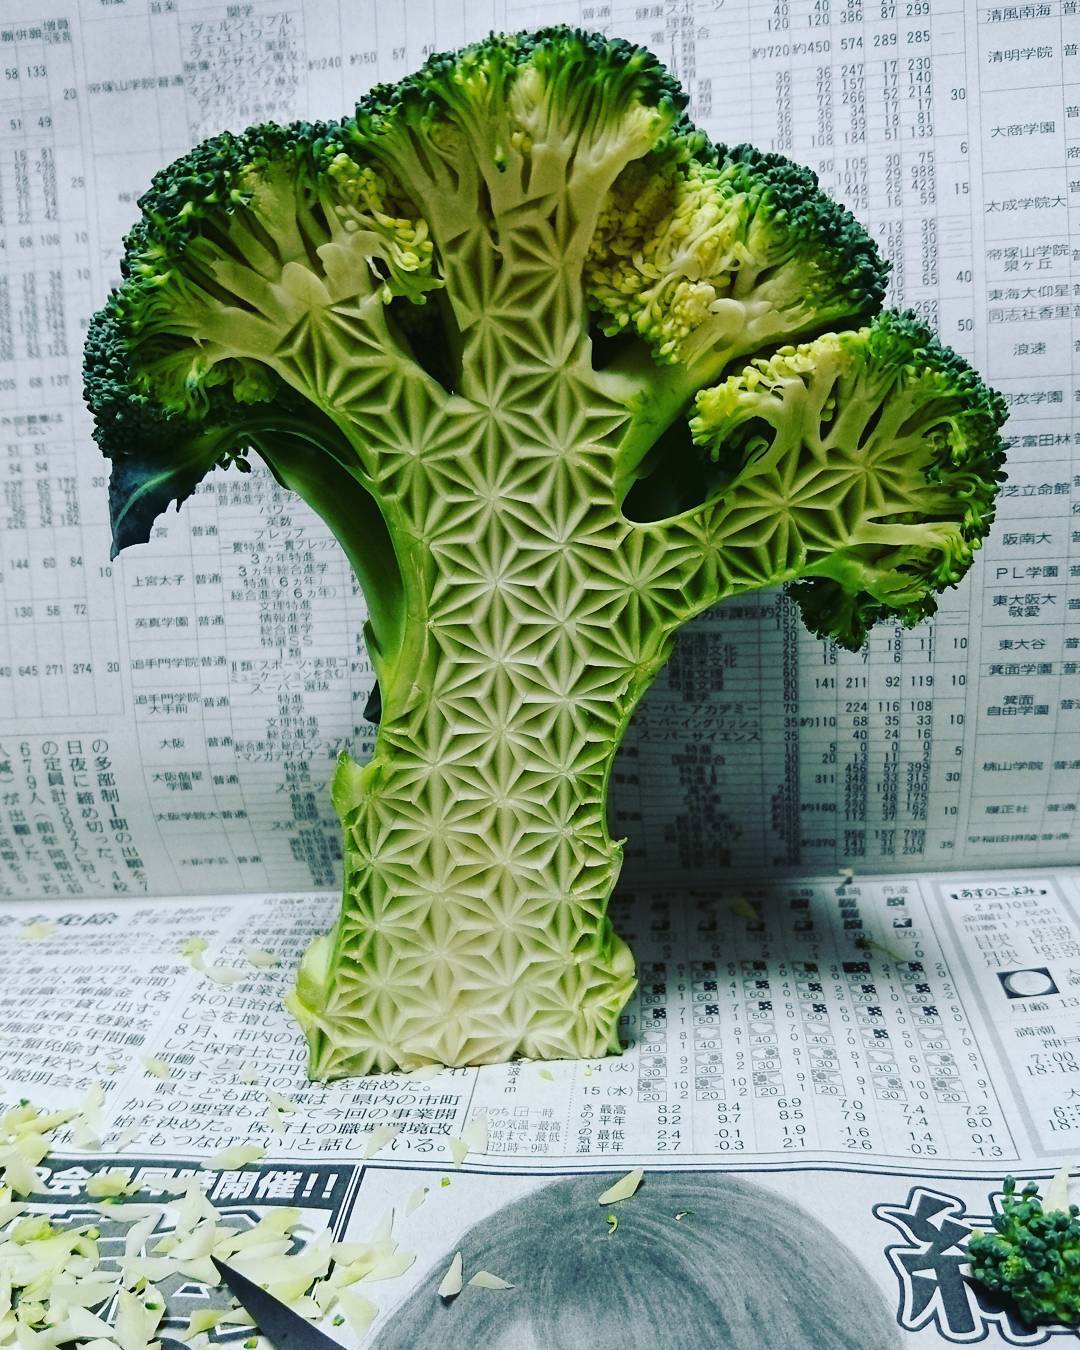 elaborately carved broccoli